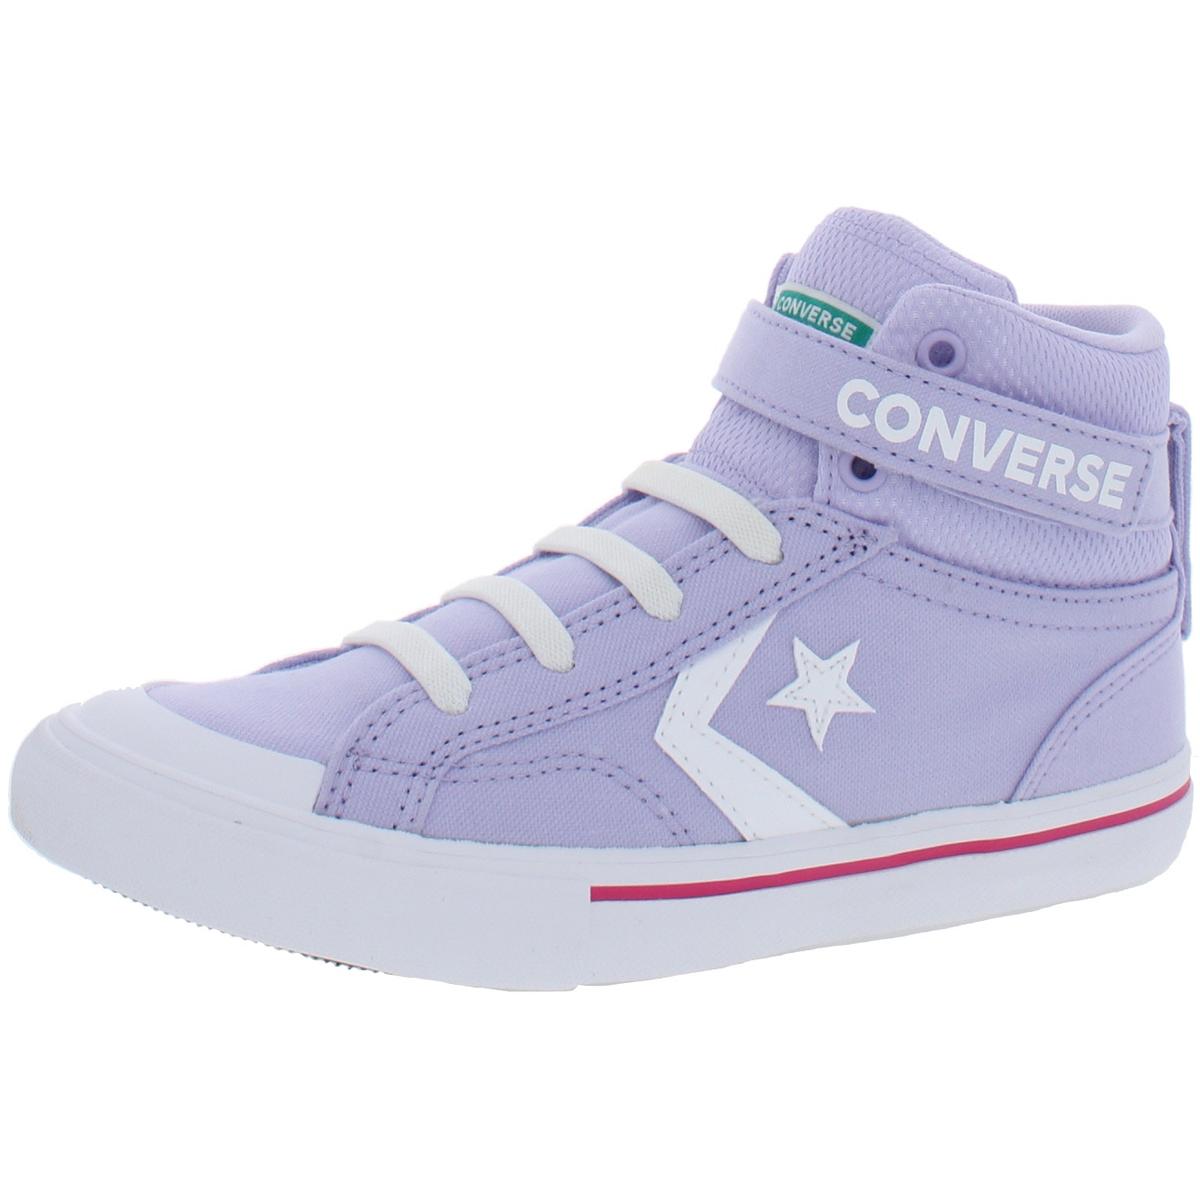 Converse Pro Blaze Strap Hi Girls Canvas Lifestyle Fashion Sneakers